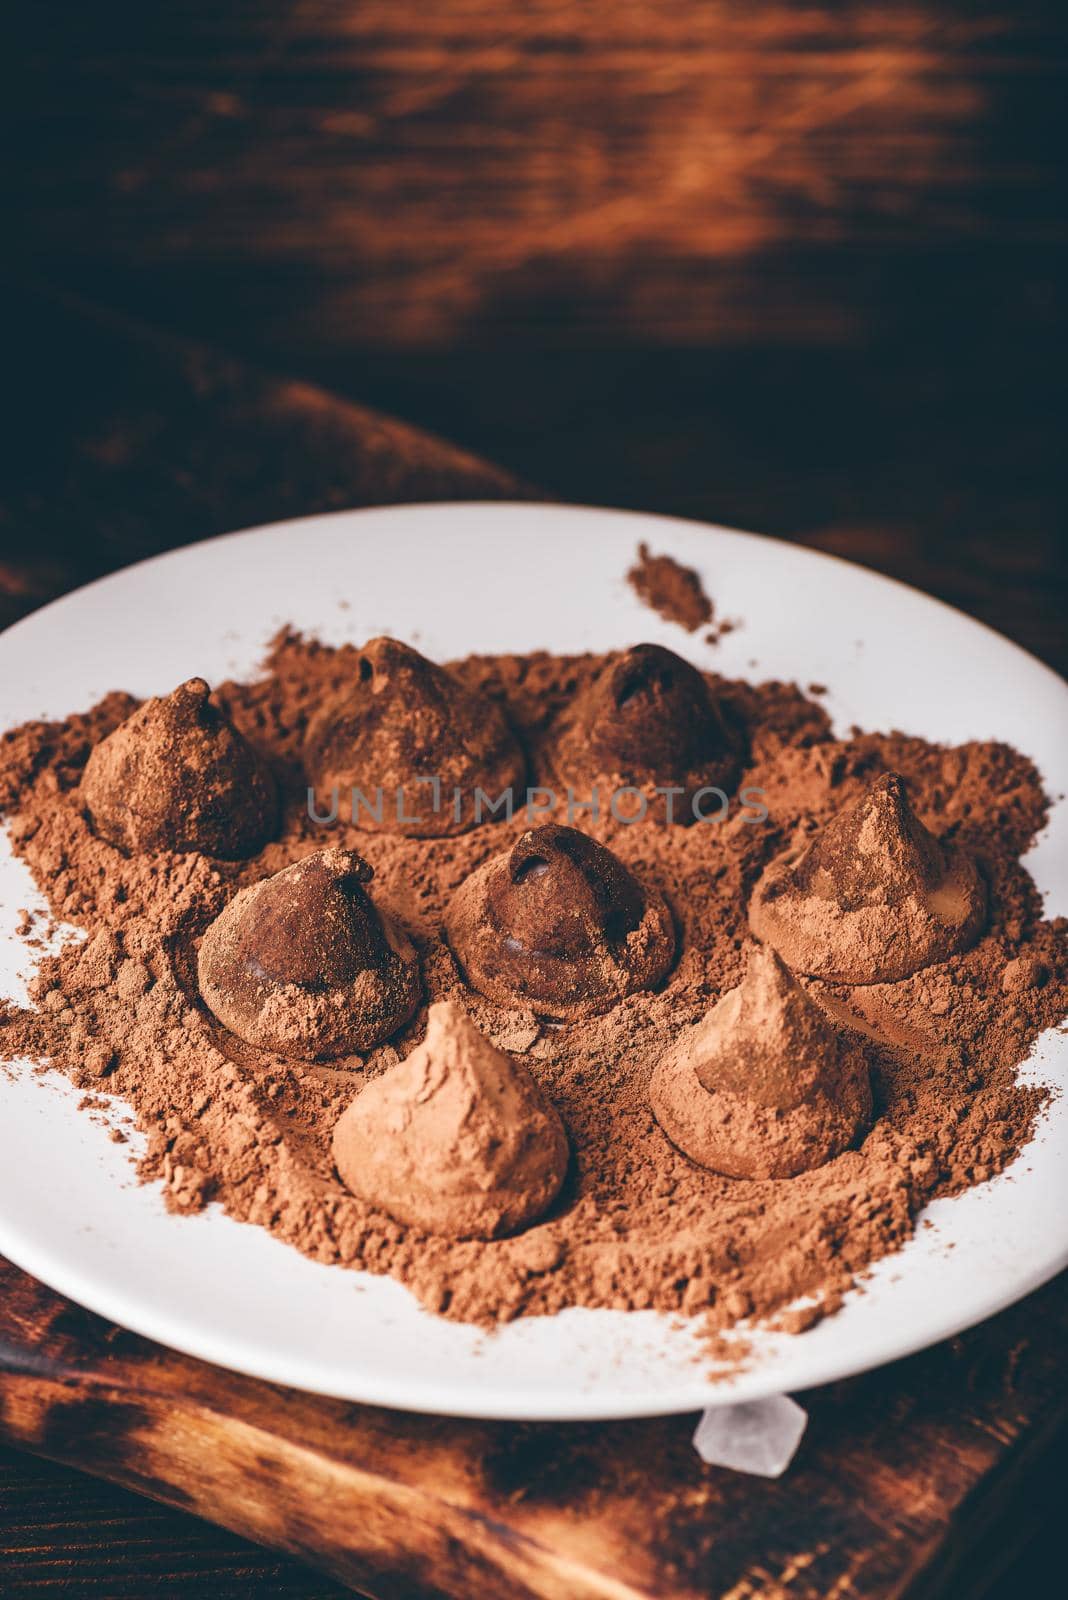 Homemade chocolate truffles coated in cocoa powder by Seva_blsv